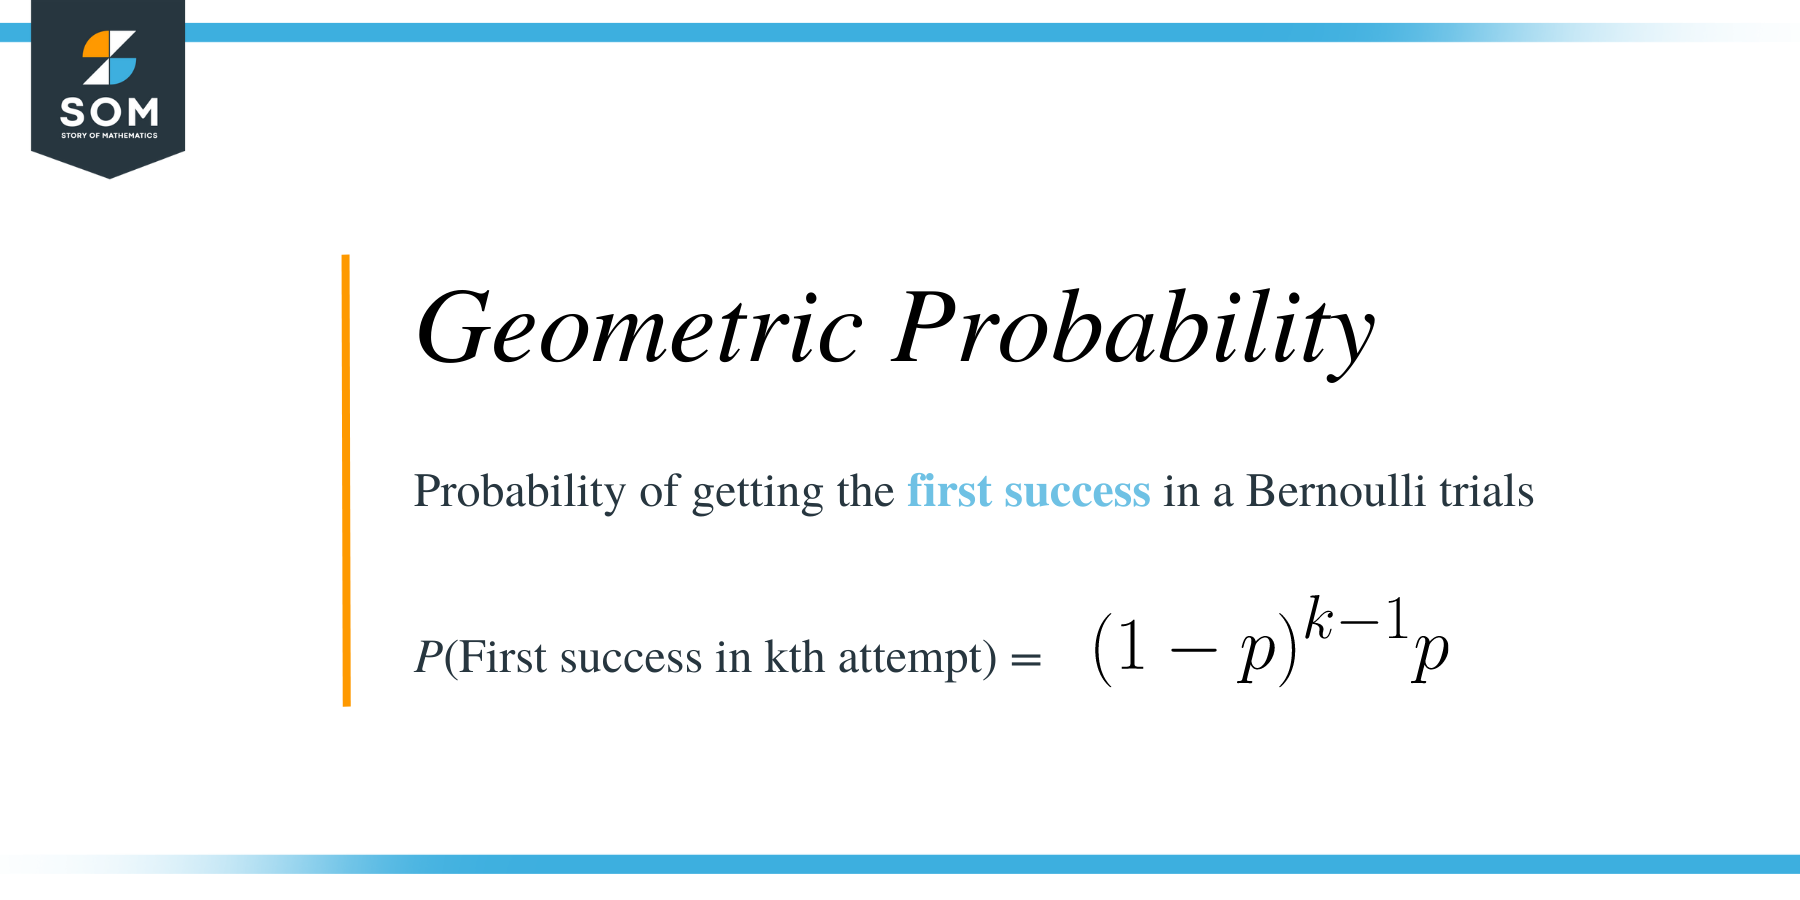 Geometric Probability Definition